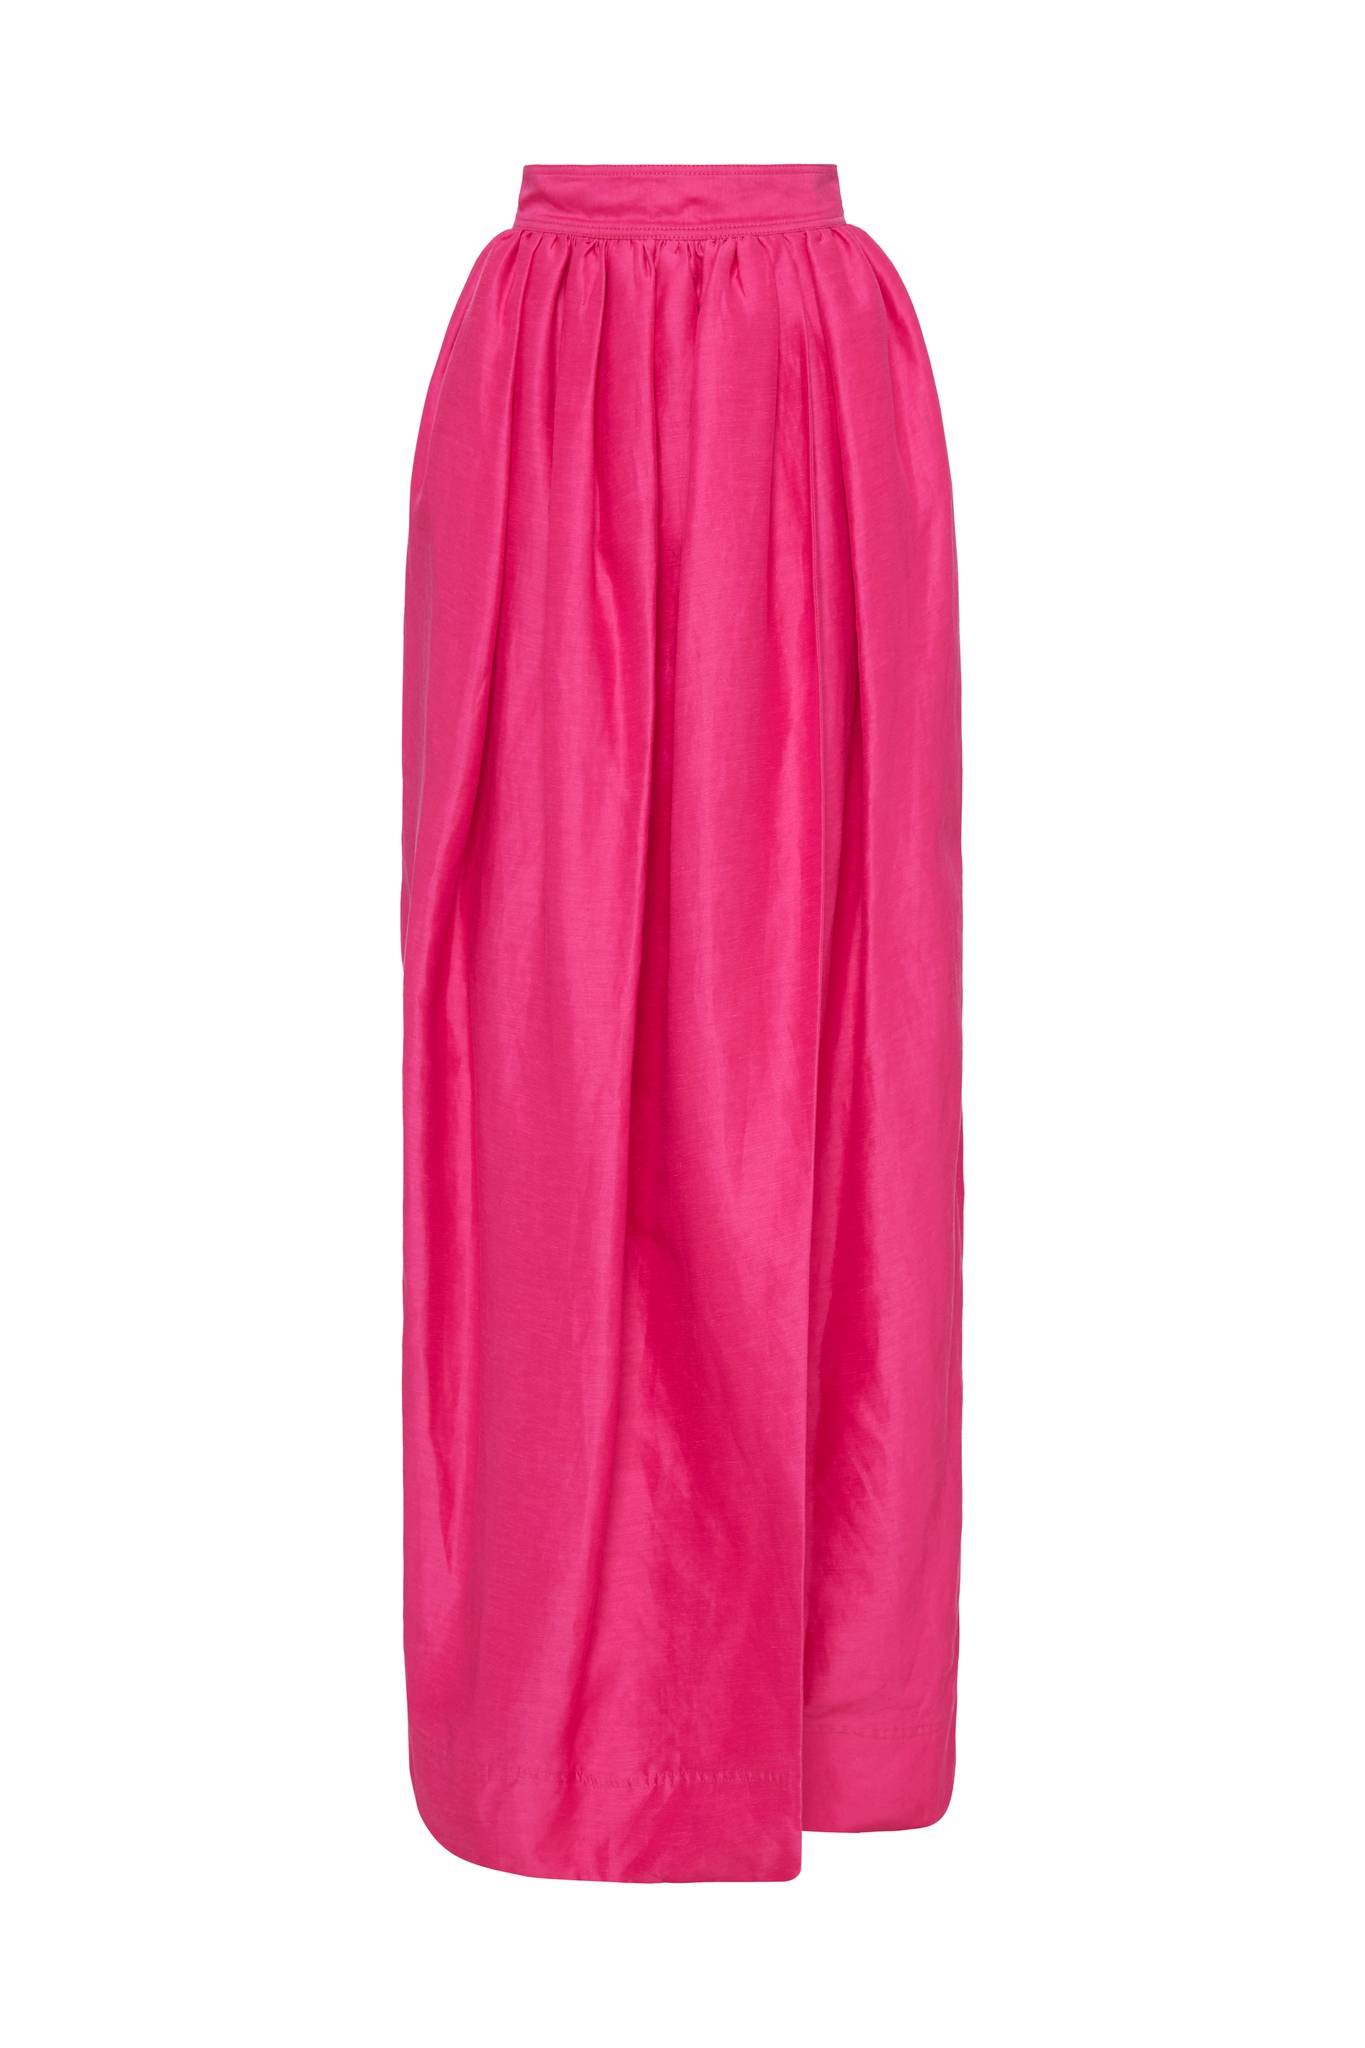 Hot pink maxi skirt